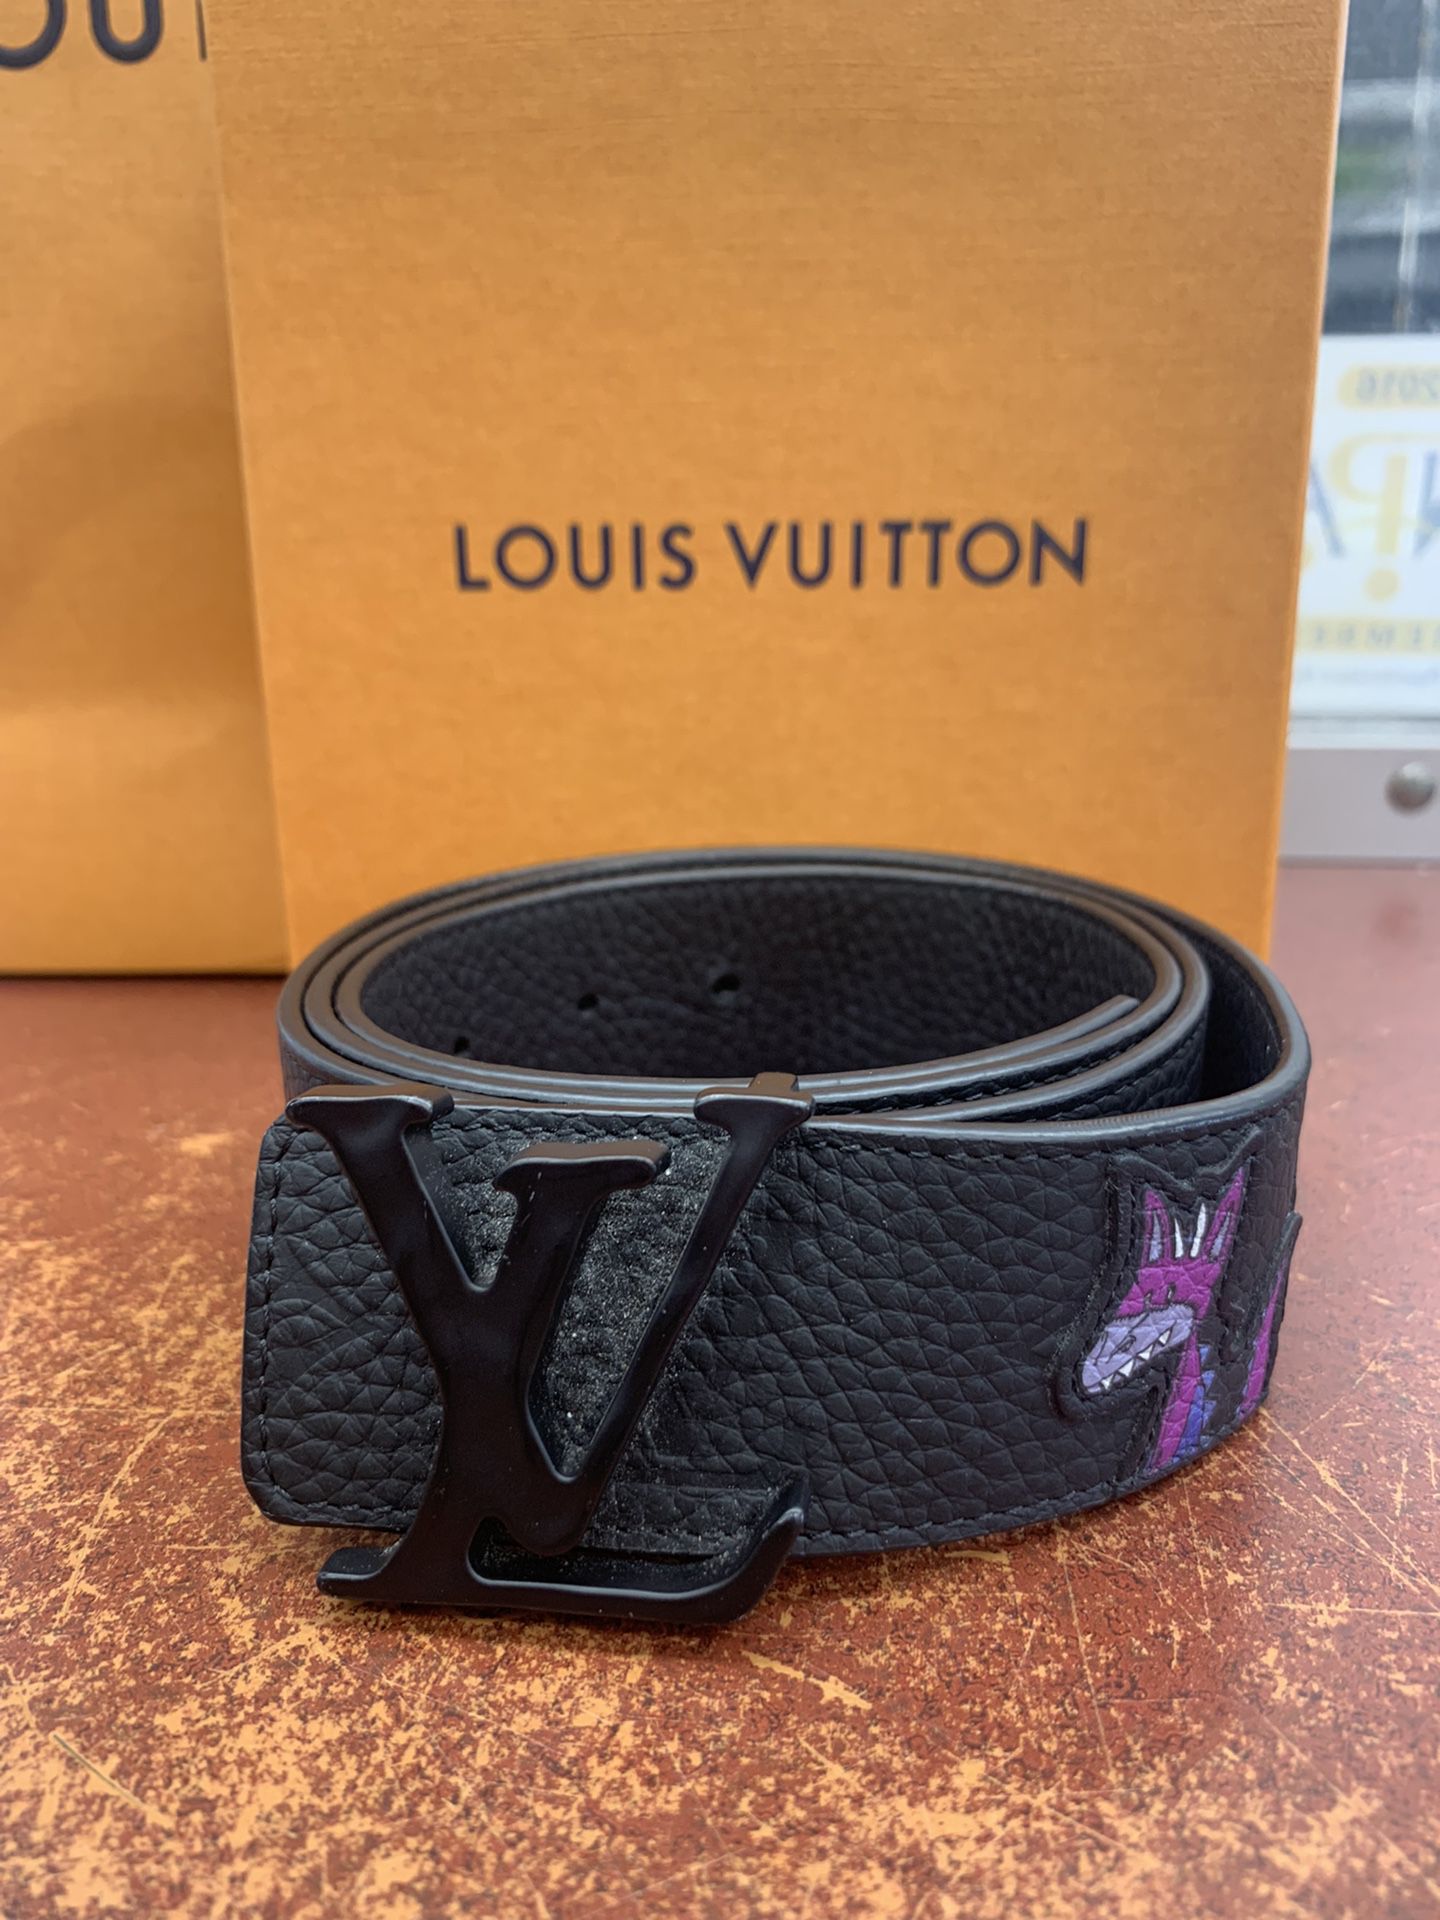 Louis Vuitton Men's Black Belt (Sz 38) for Sale in Houston, TX - OfferUp